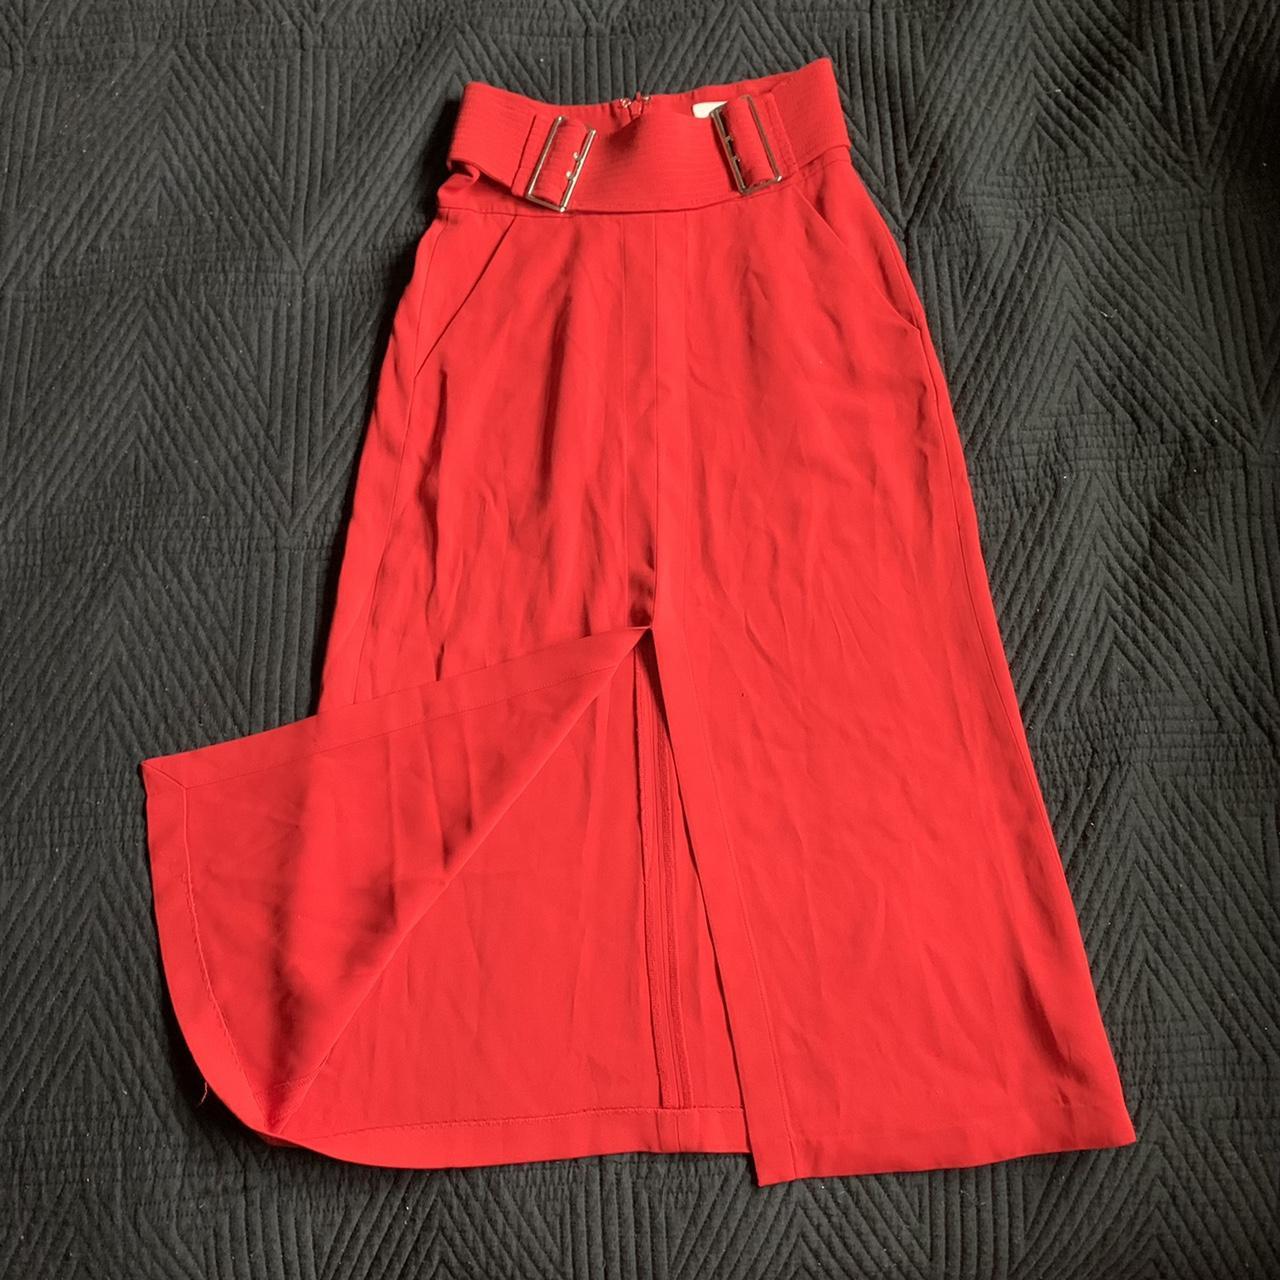 Product Image 2 - Red High Slit Midi Skirt

High